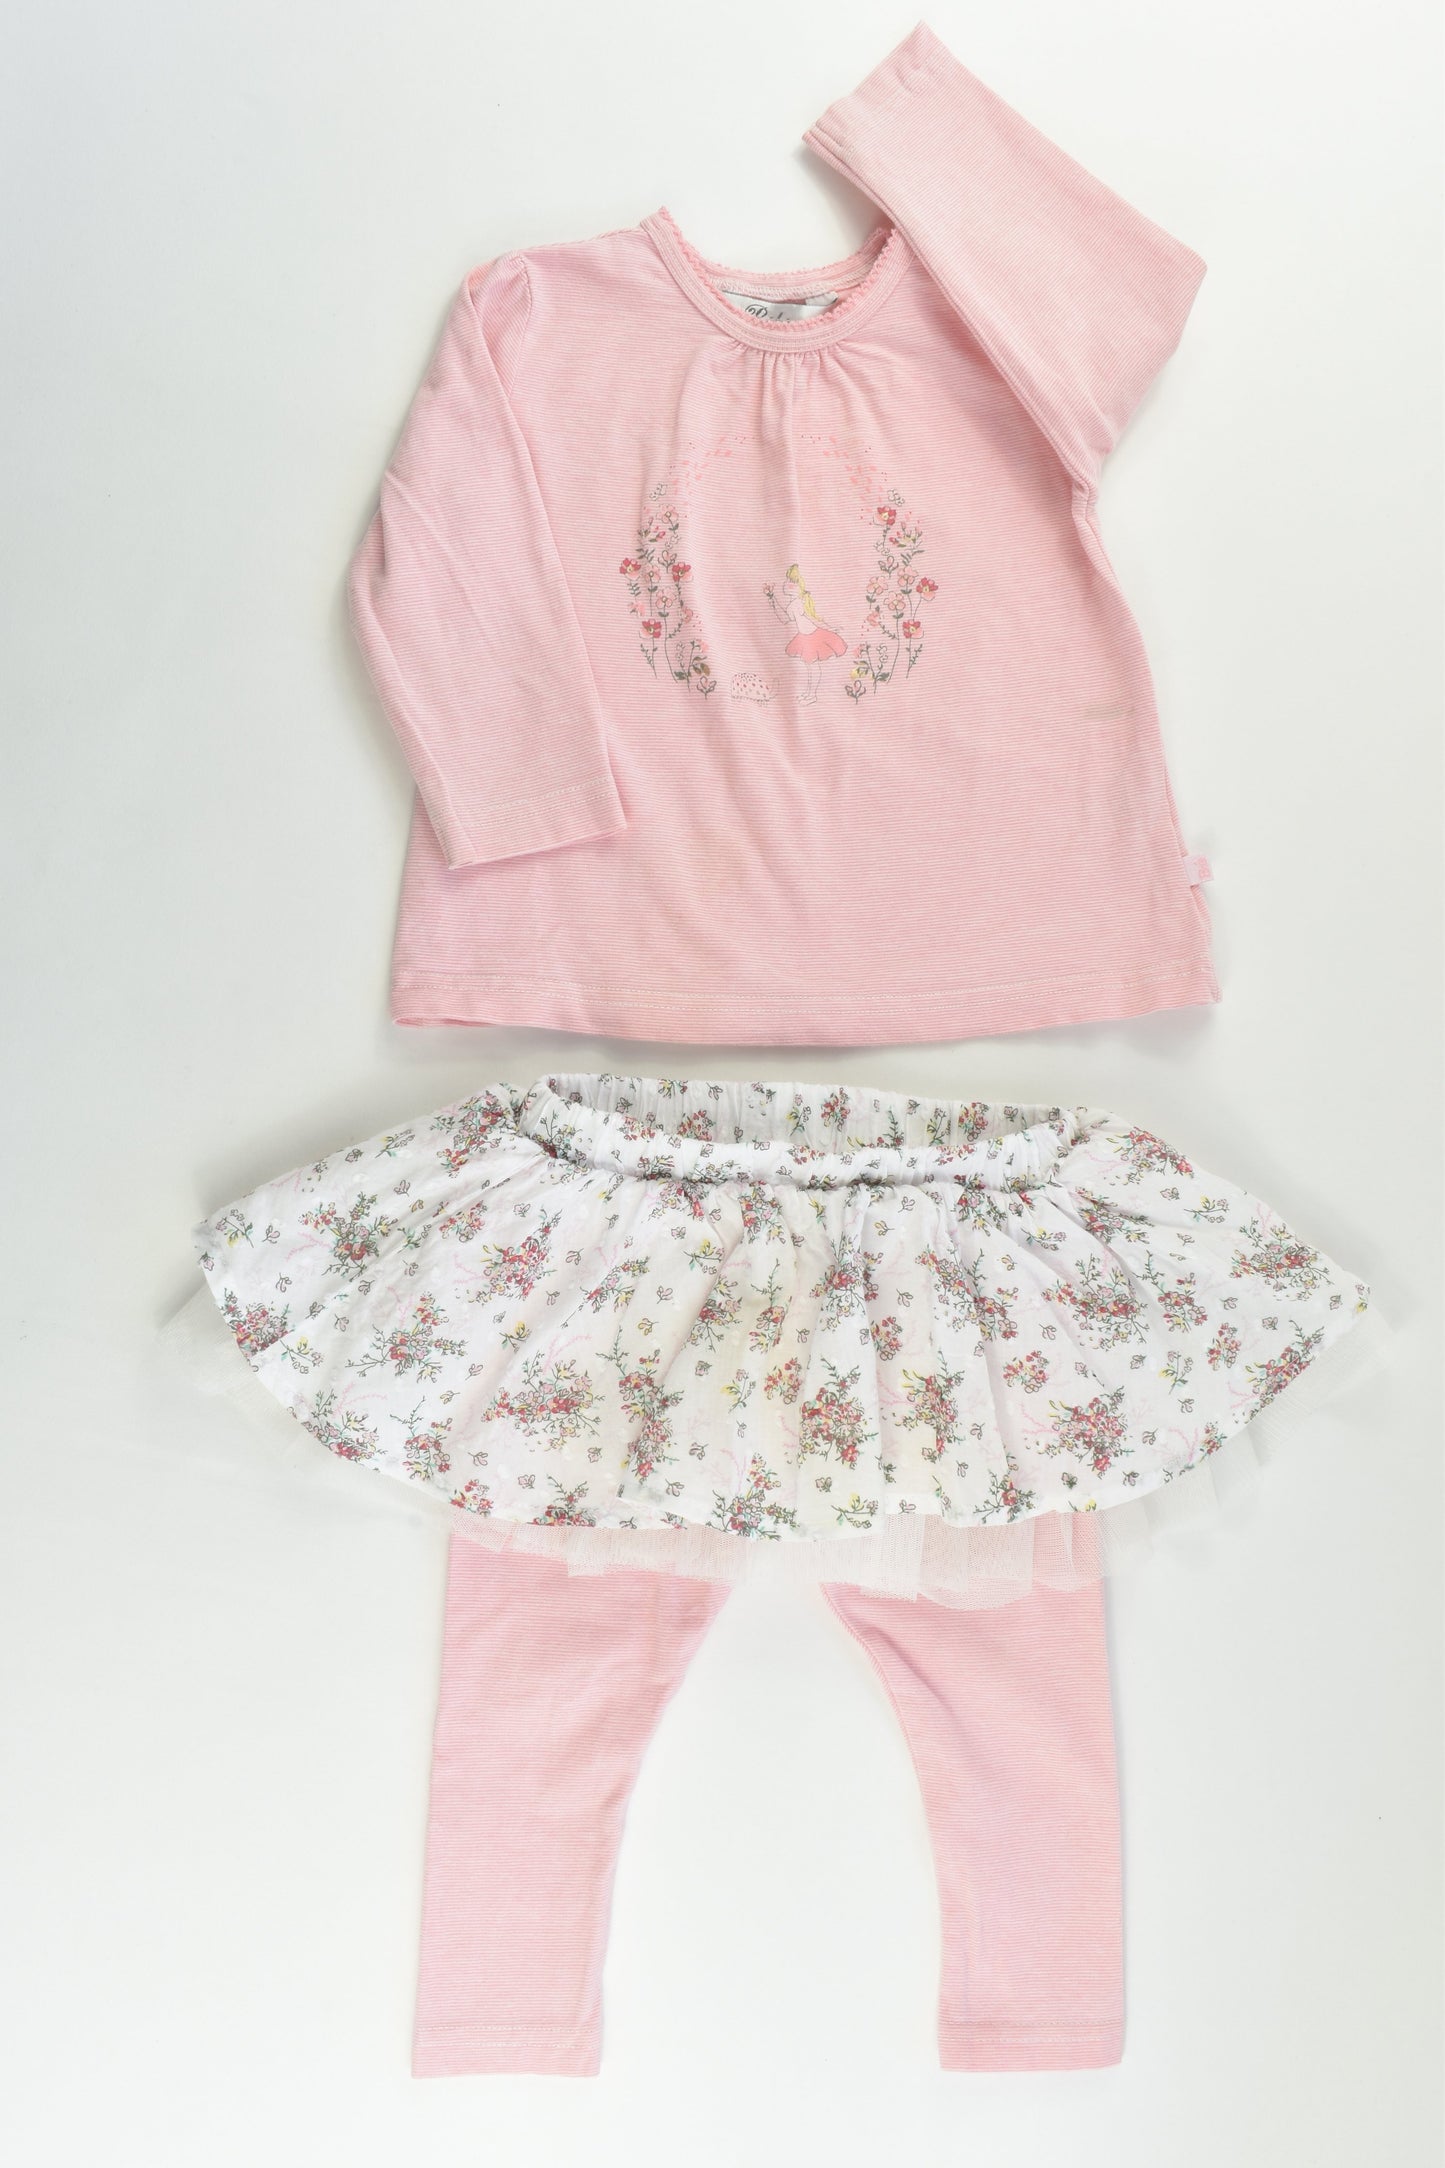 Bébé by Minihaha Size 0 (6-8 months) Outfit